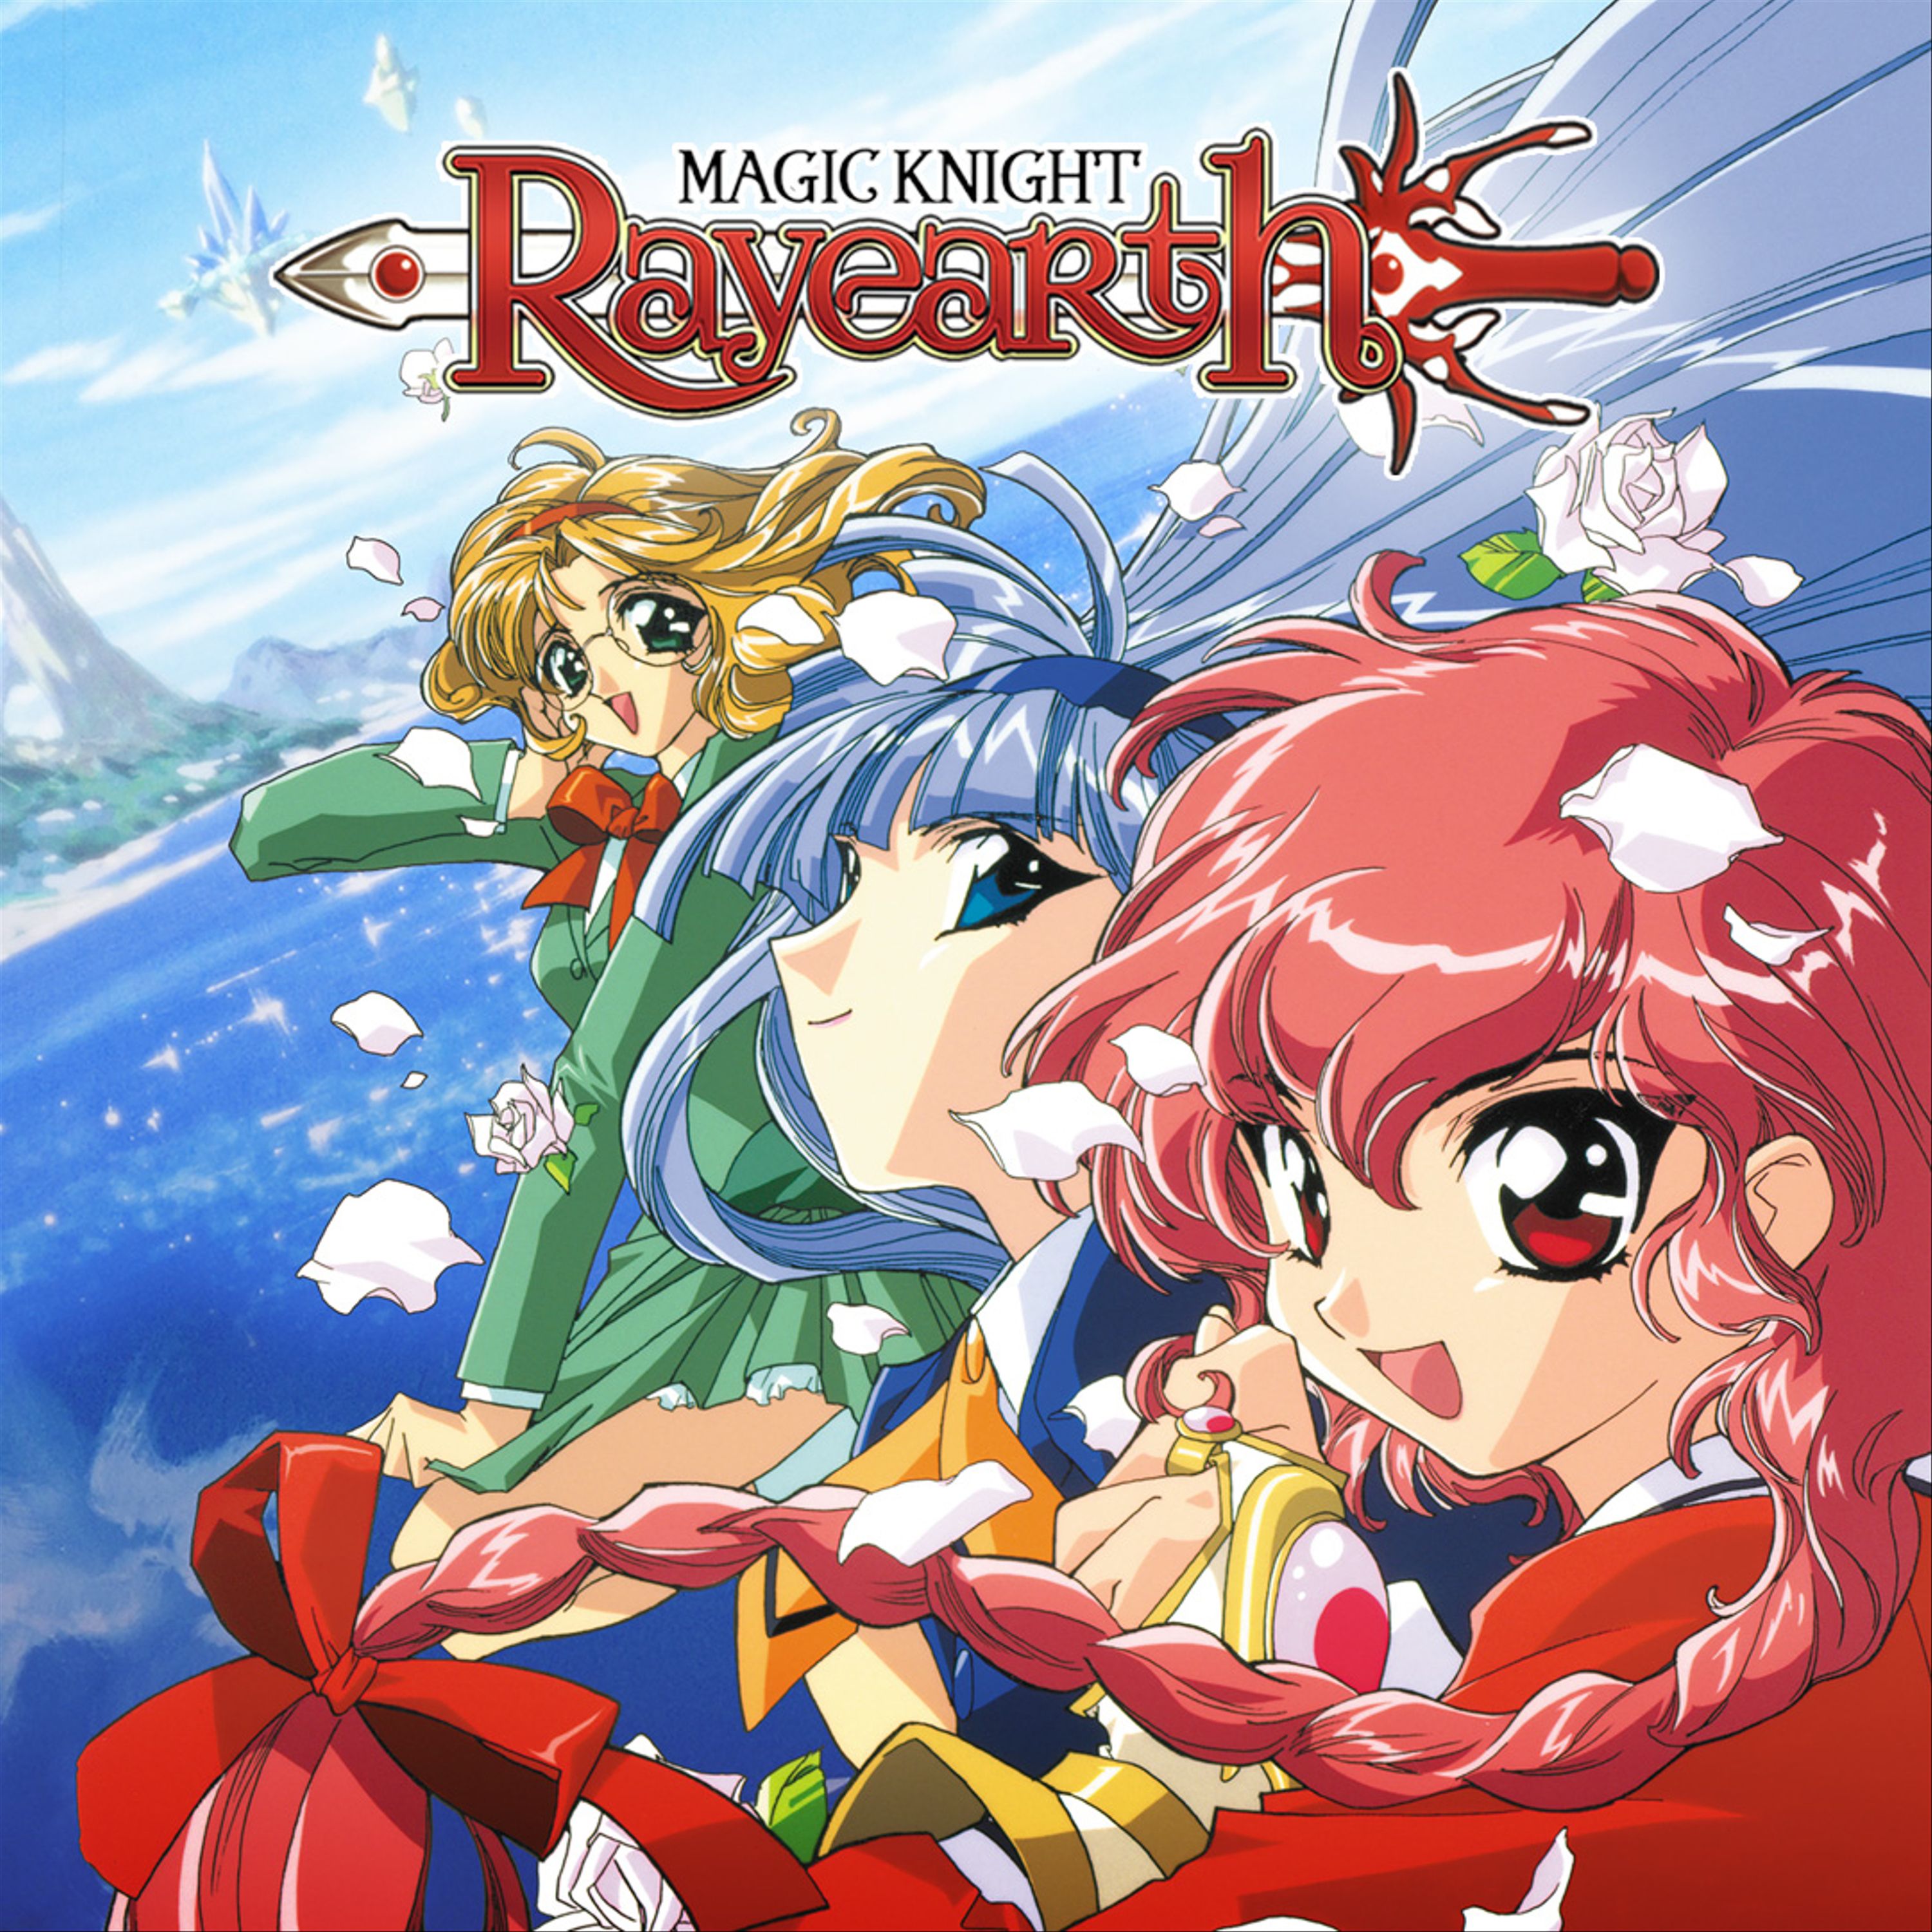 Magic Knight Rayearth - TV Series Season One (Brand New 4-Disc Anime Set)  631595092677 | eBay